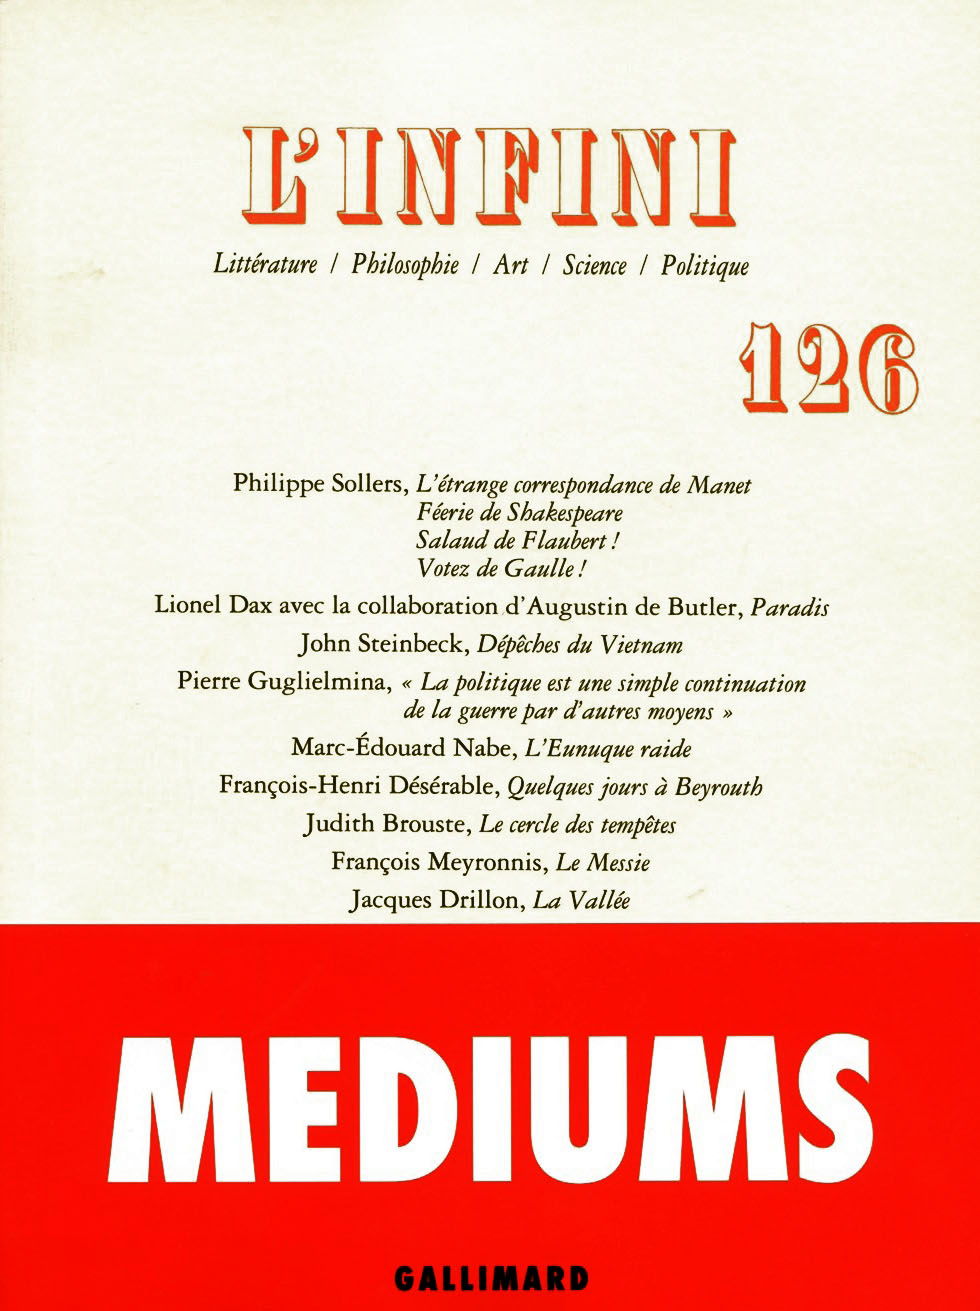 L'INFINI n126 - Mdiums